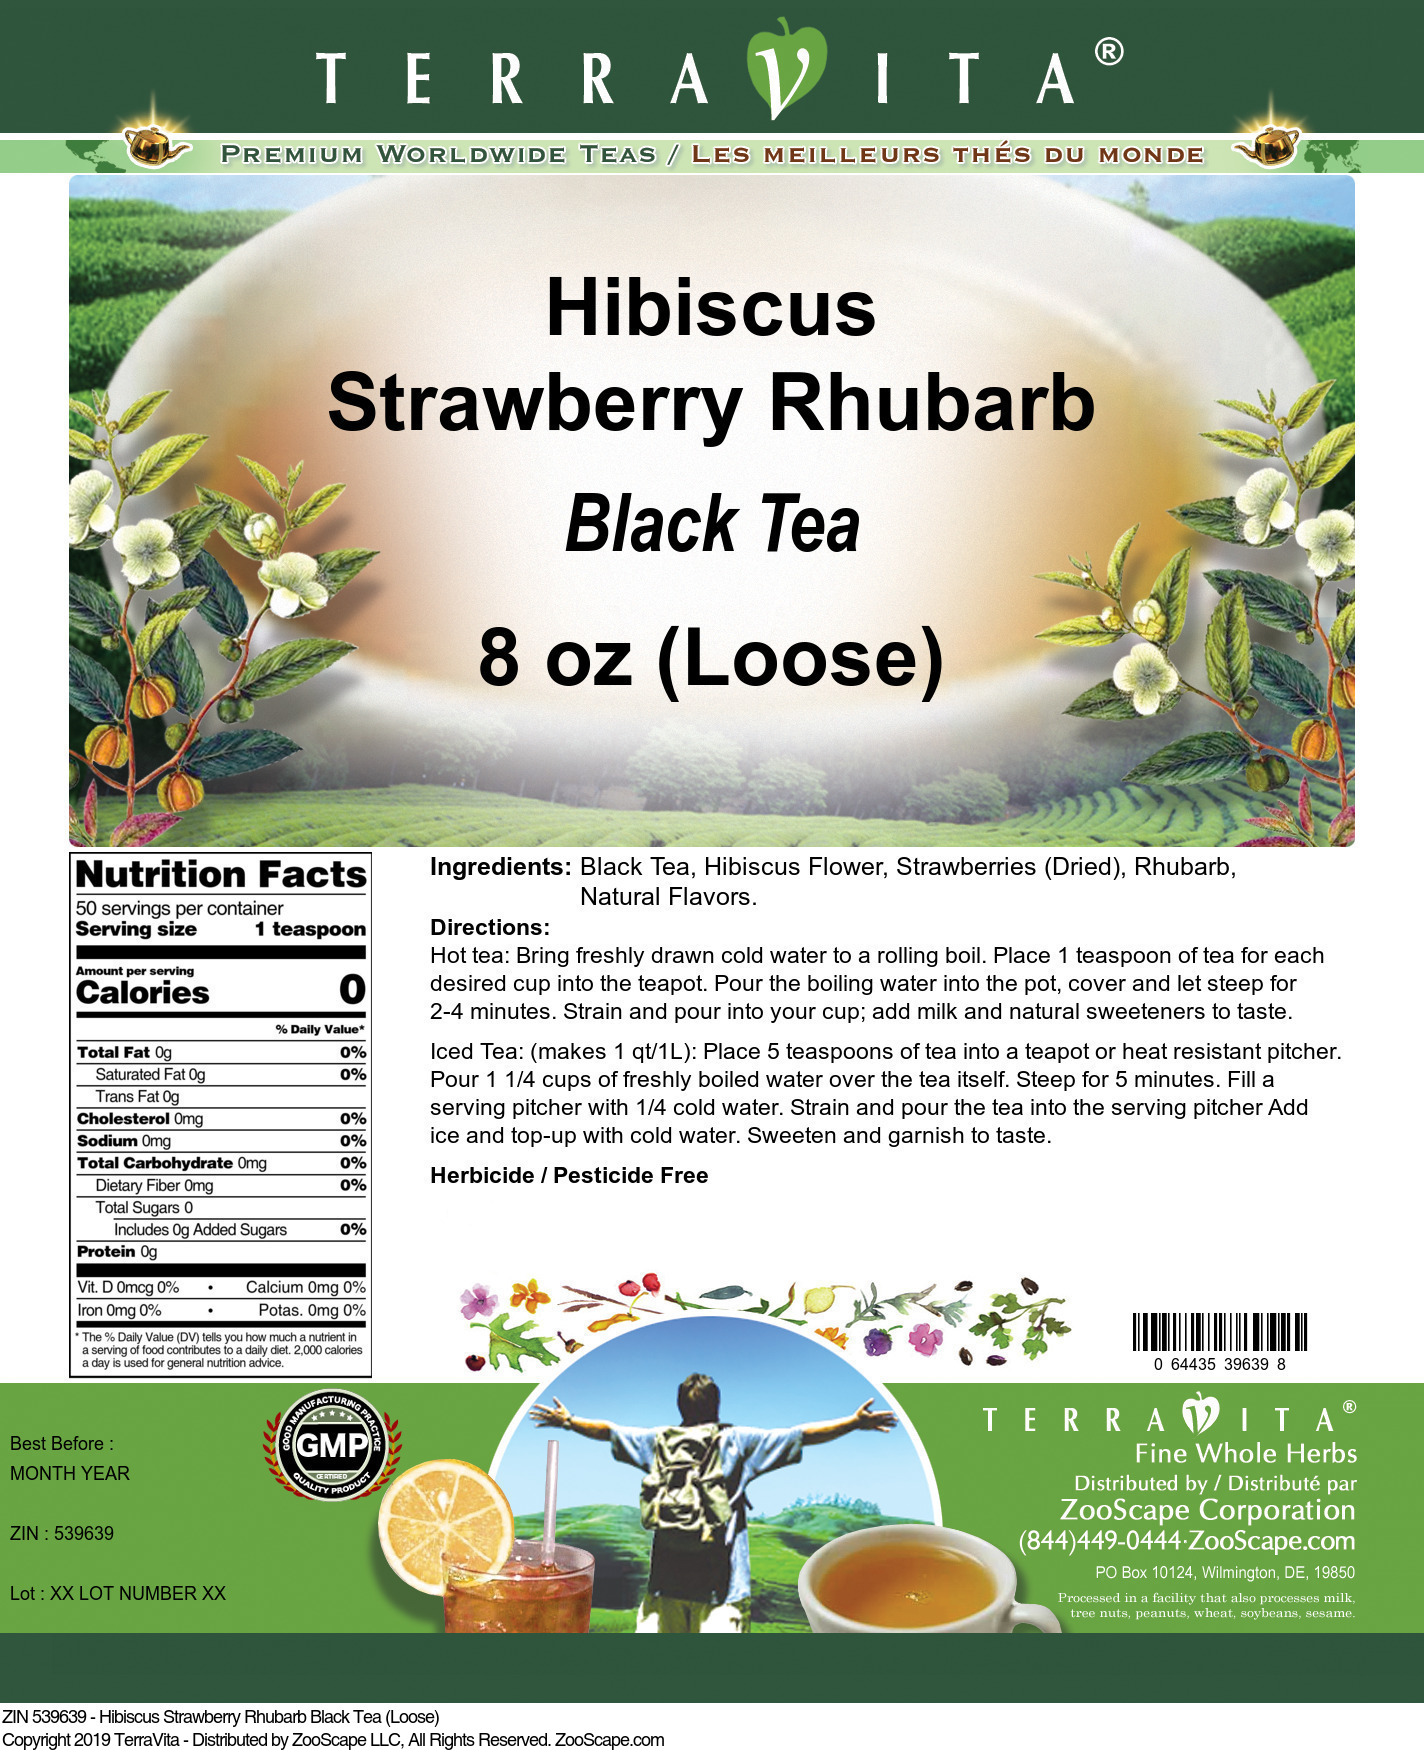 Hibiscus Strawberry Rhubarb Black Tea (Loose) - Label